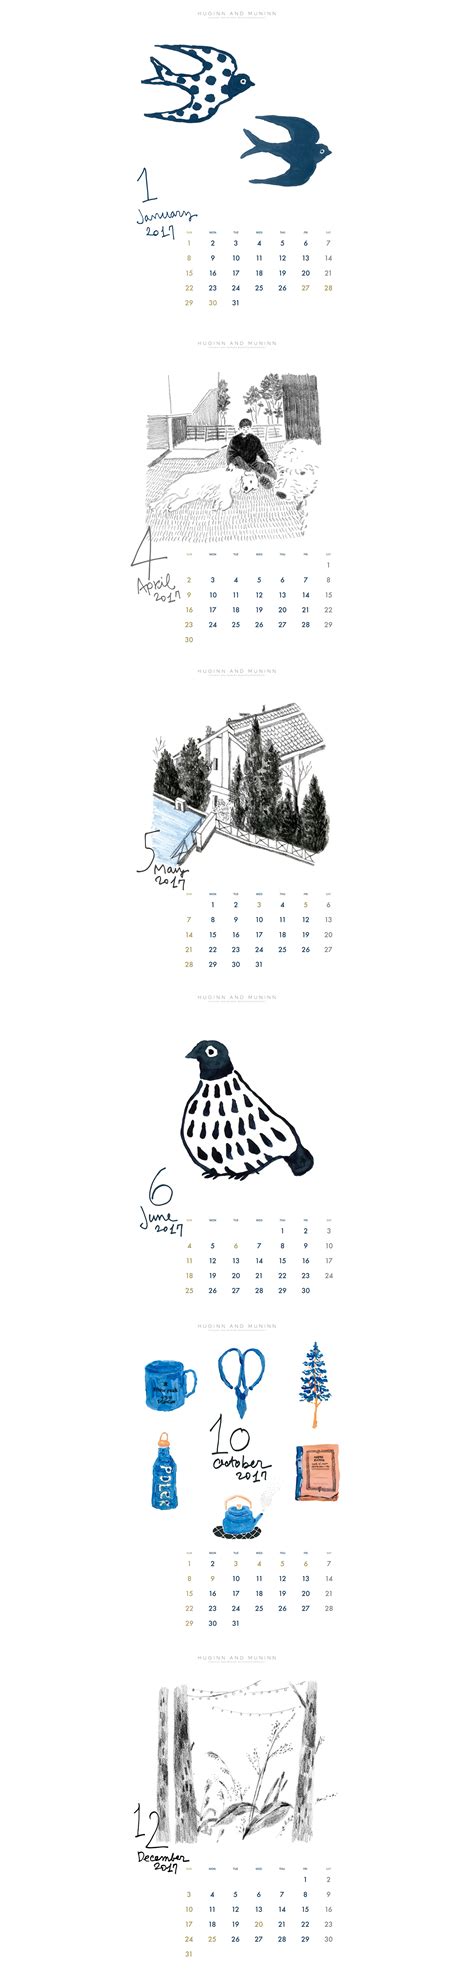 2017 Calendar On Behance Calendar Behance Words Illustration Fabric